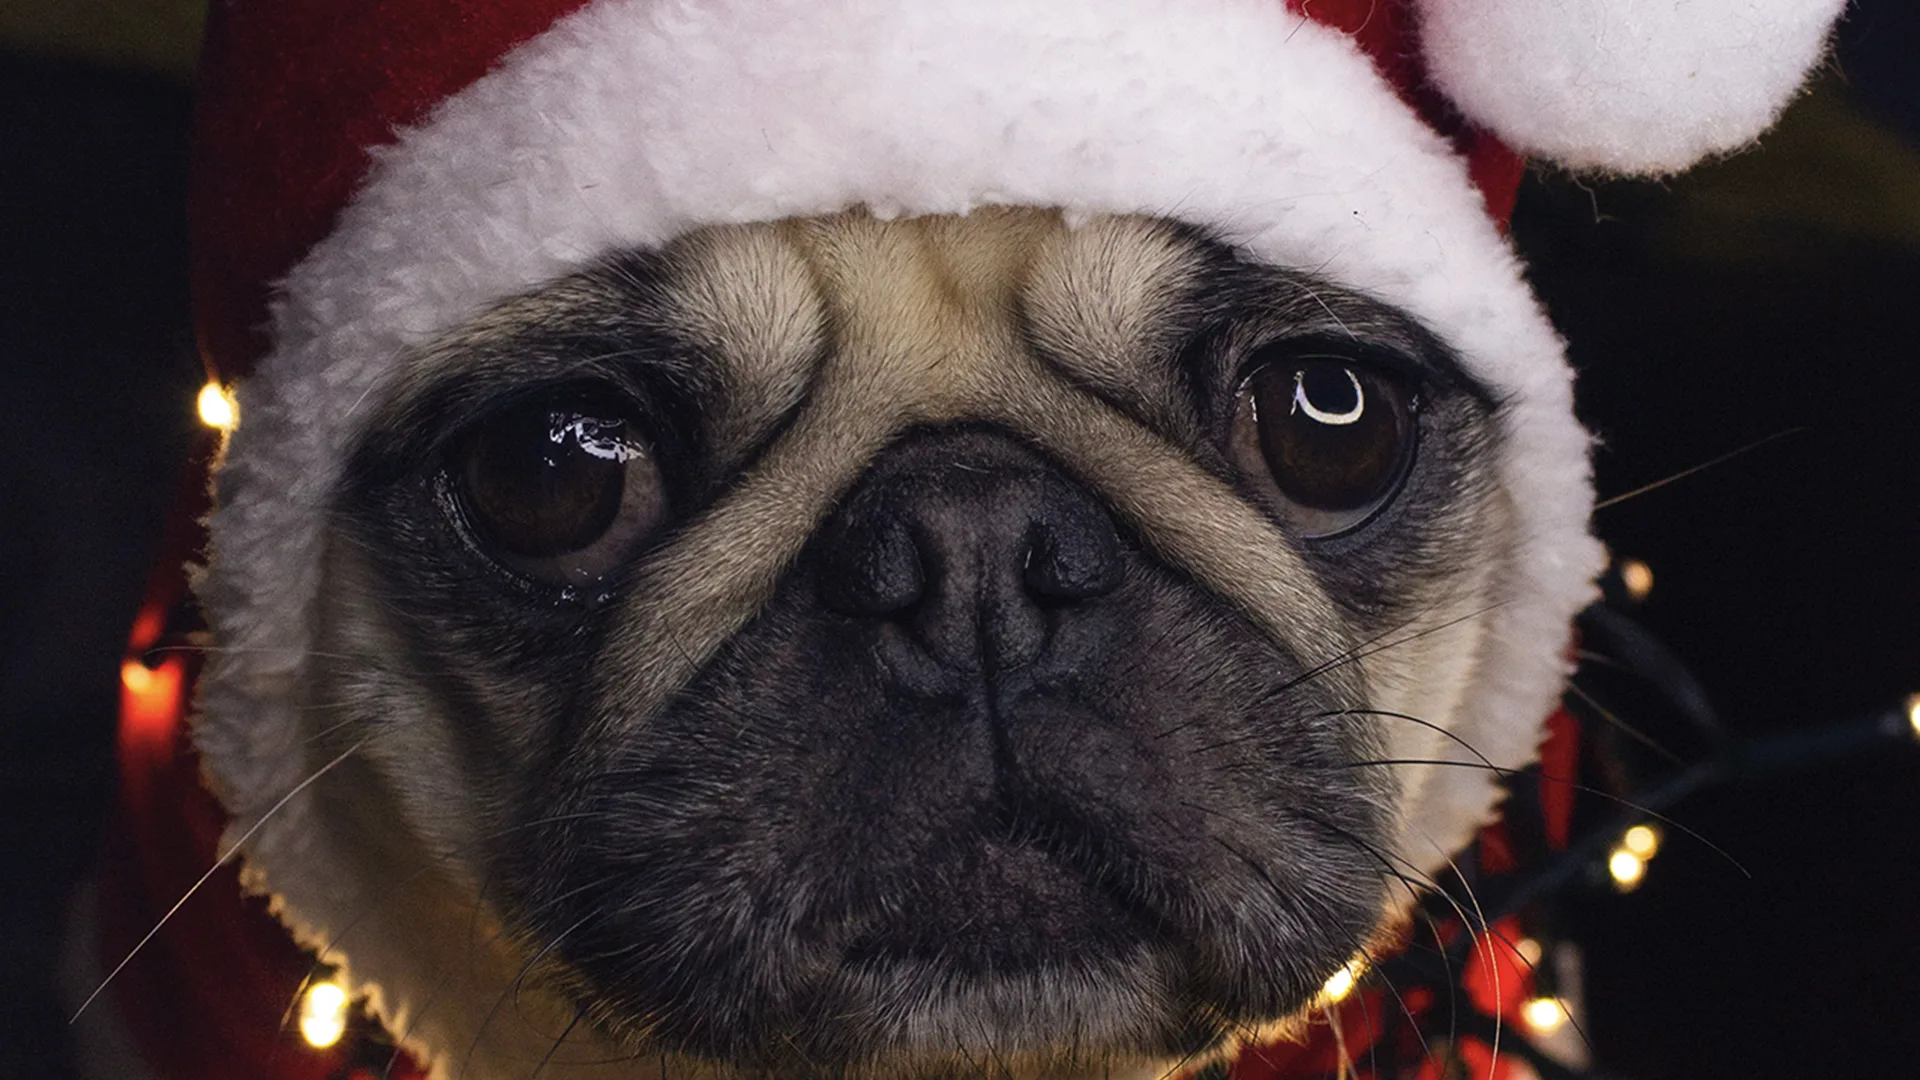 Grumpy pug wearing a Santa hat